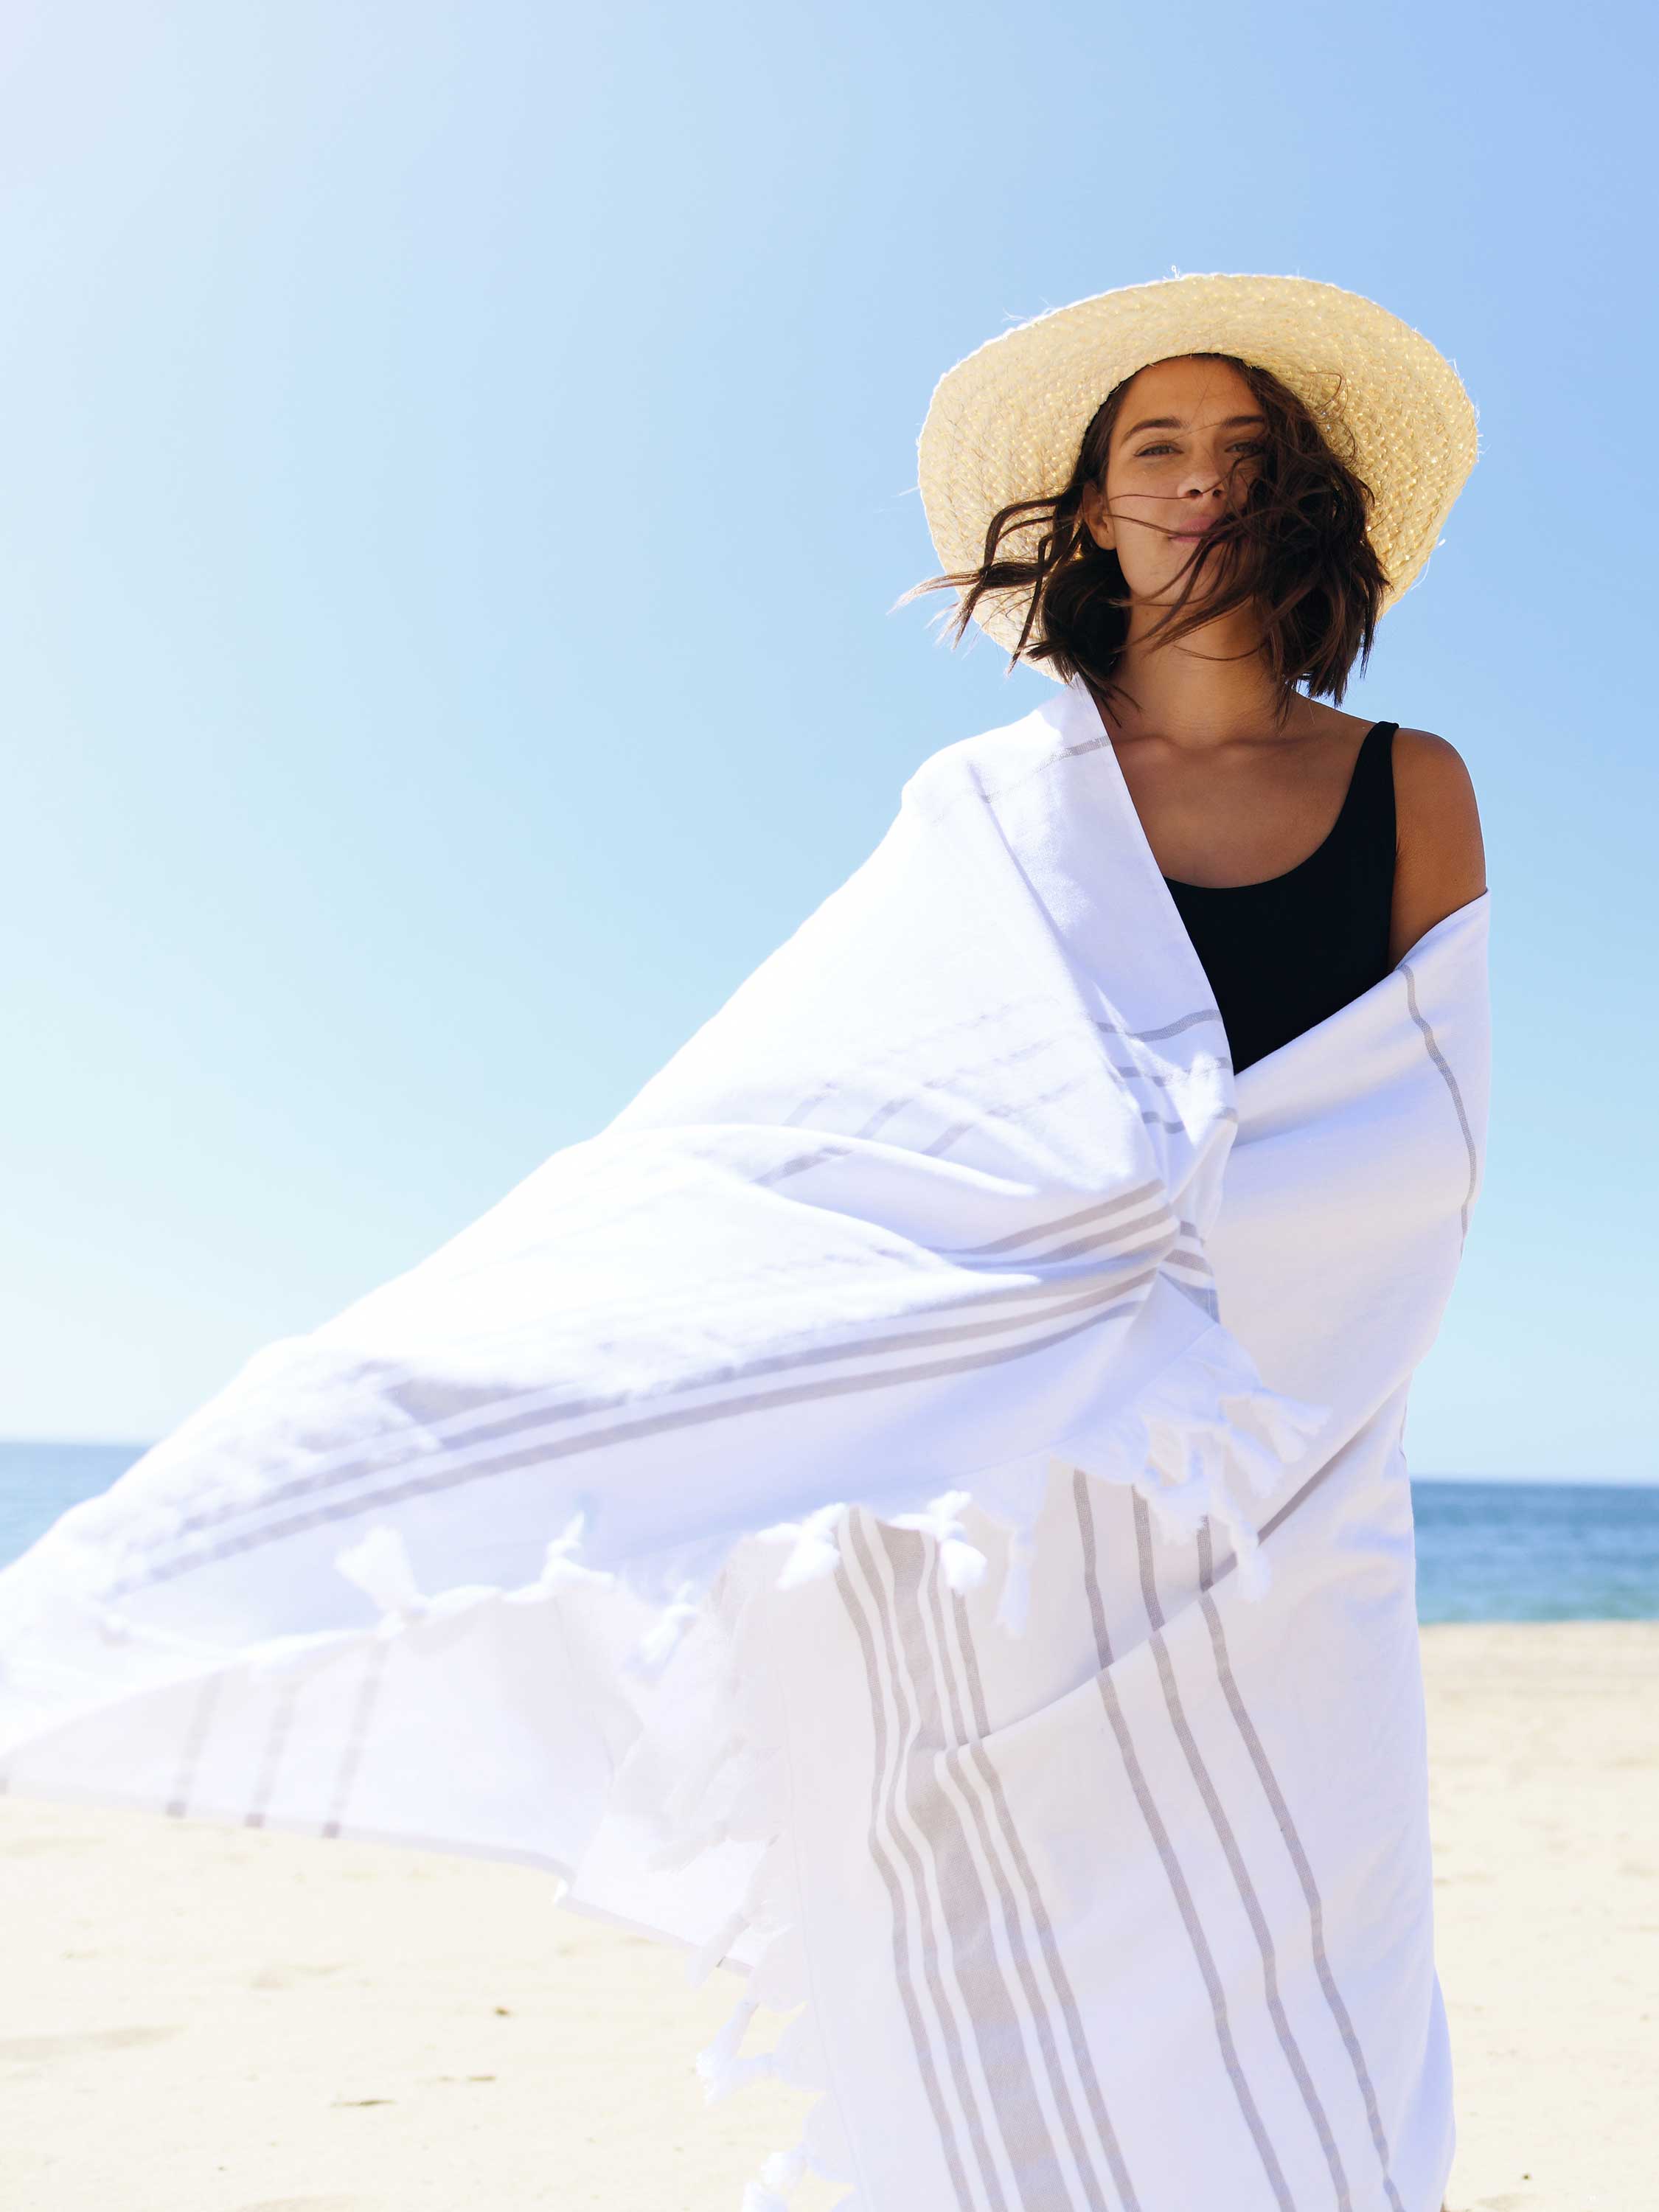 White Azul Classic Turkish Hand Towel – Laguna Beach Textile Company